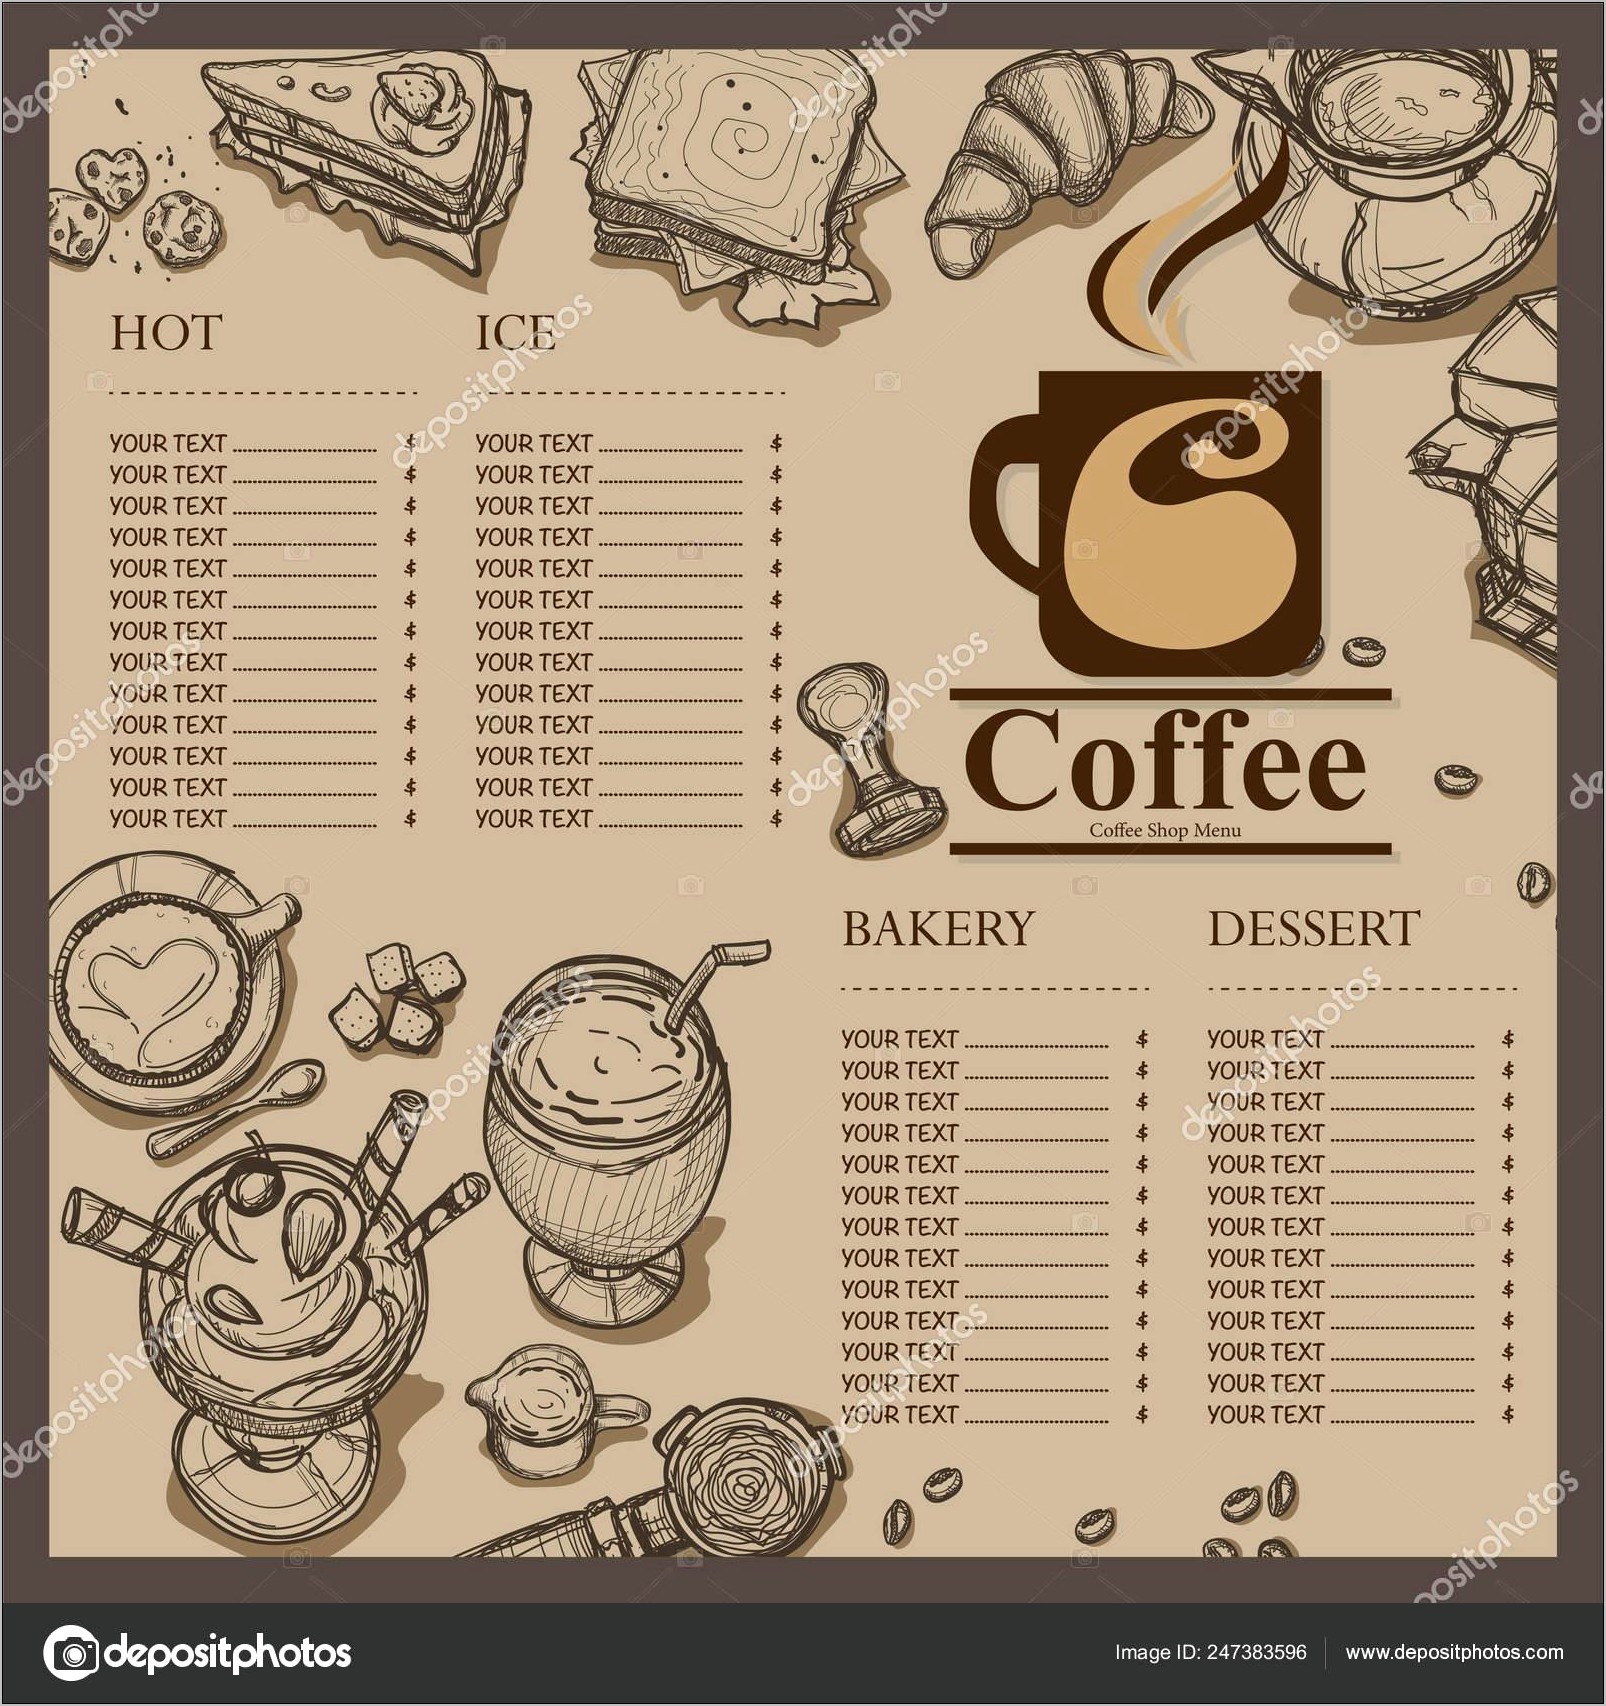 Coffee Shop Menu Template Free Download Resume Example Gallery